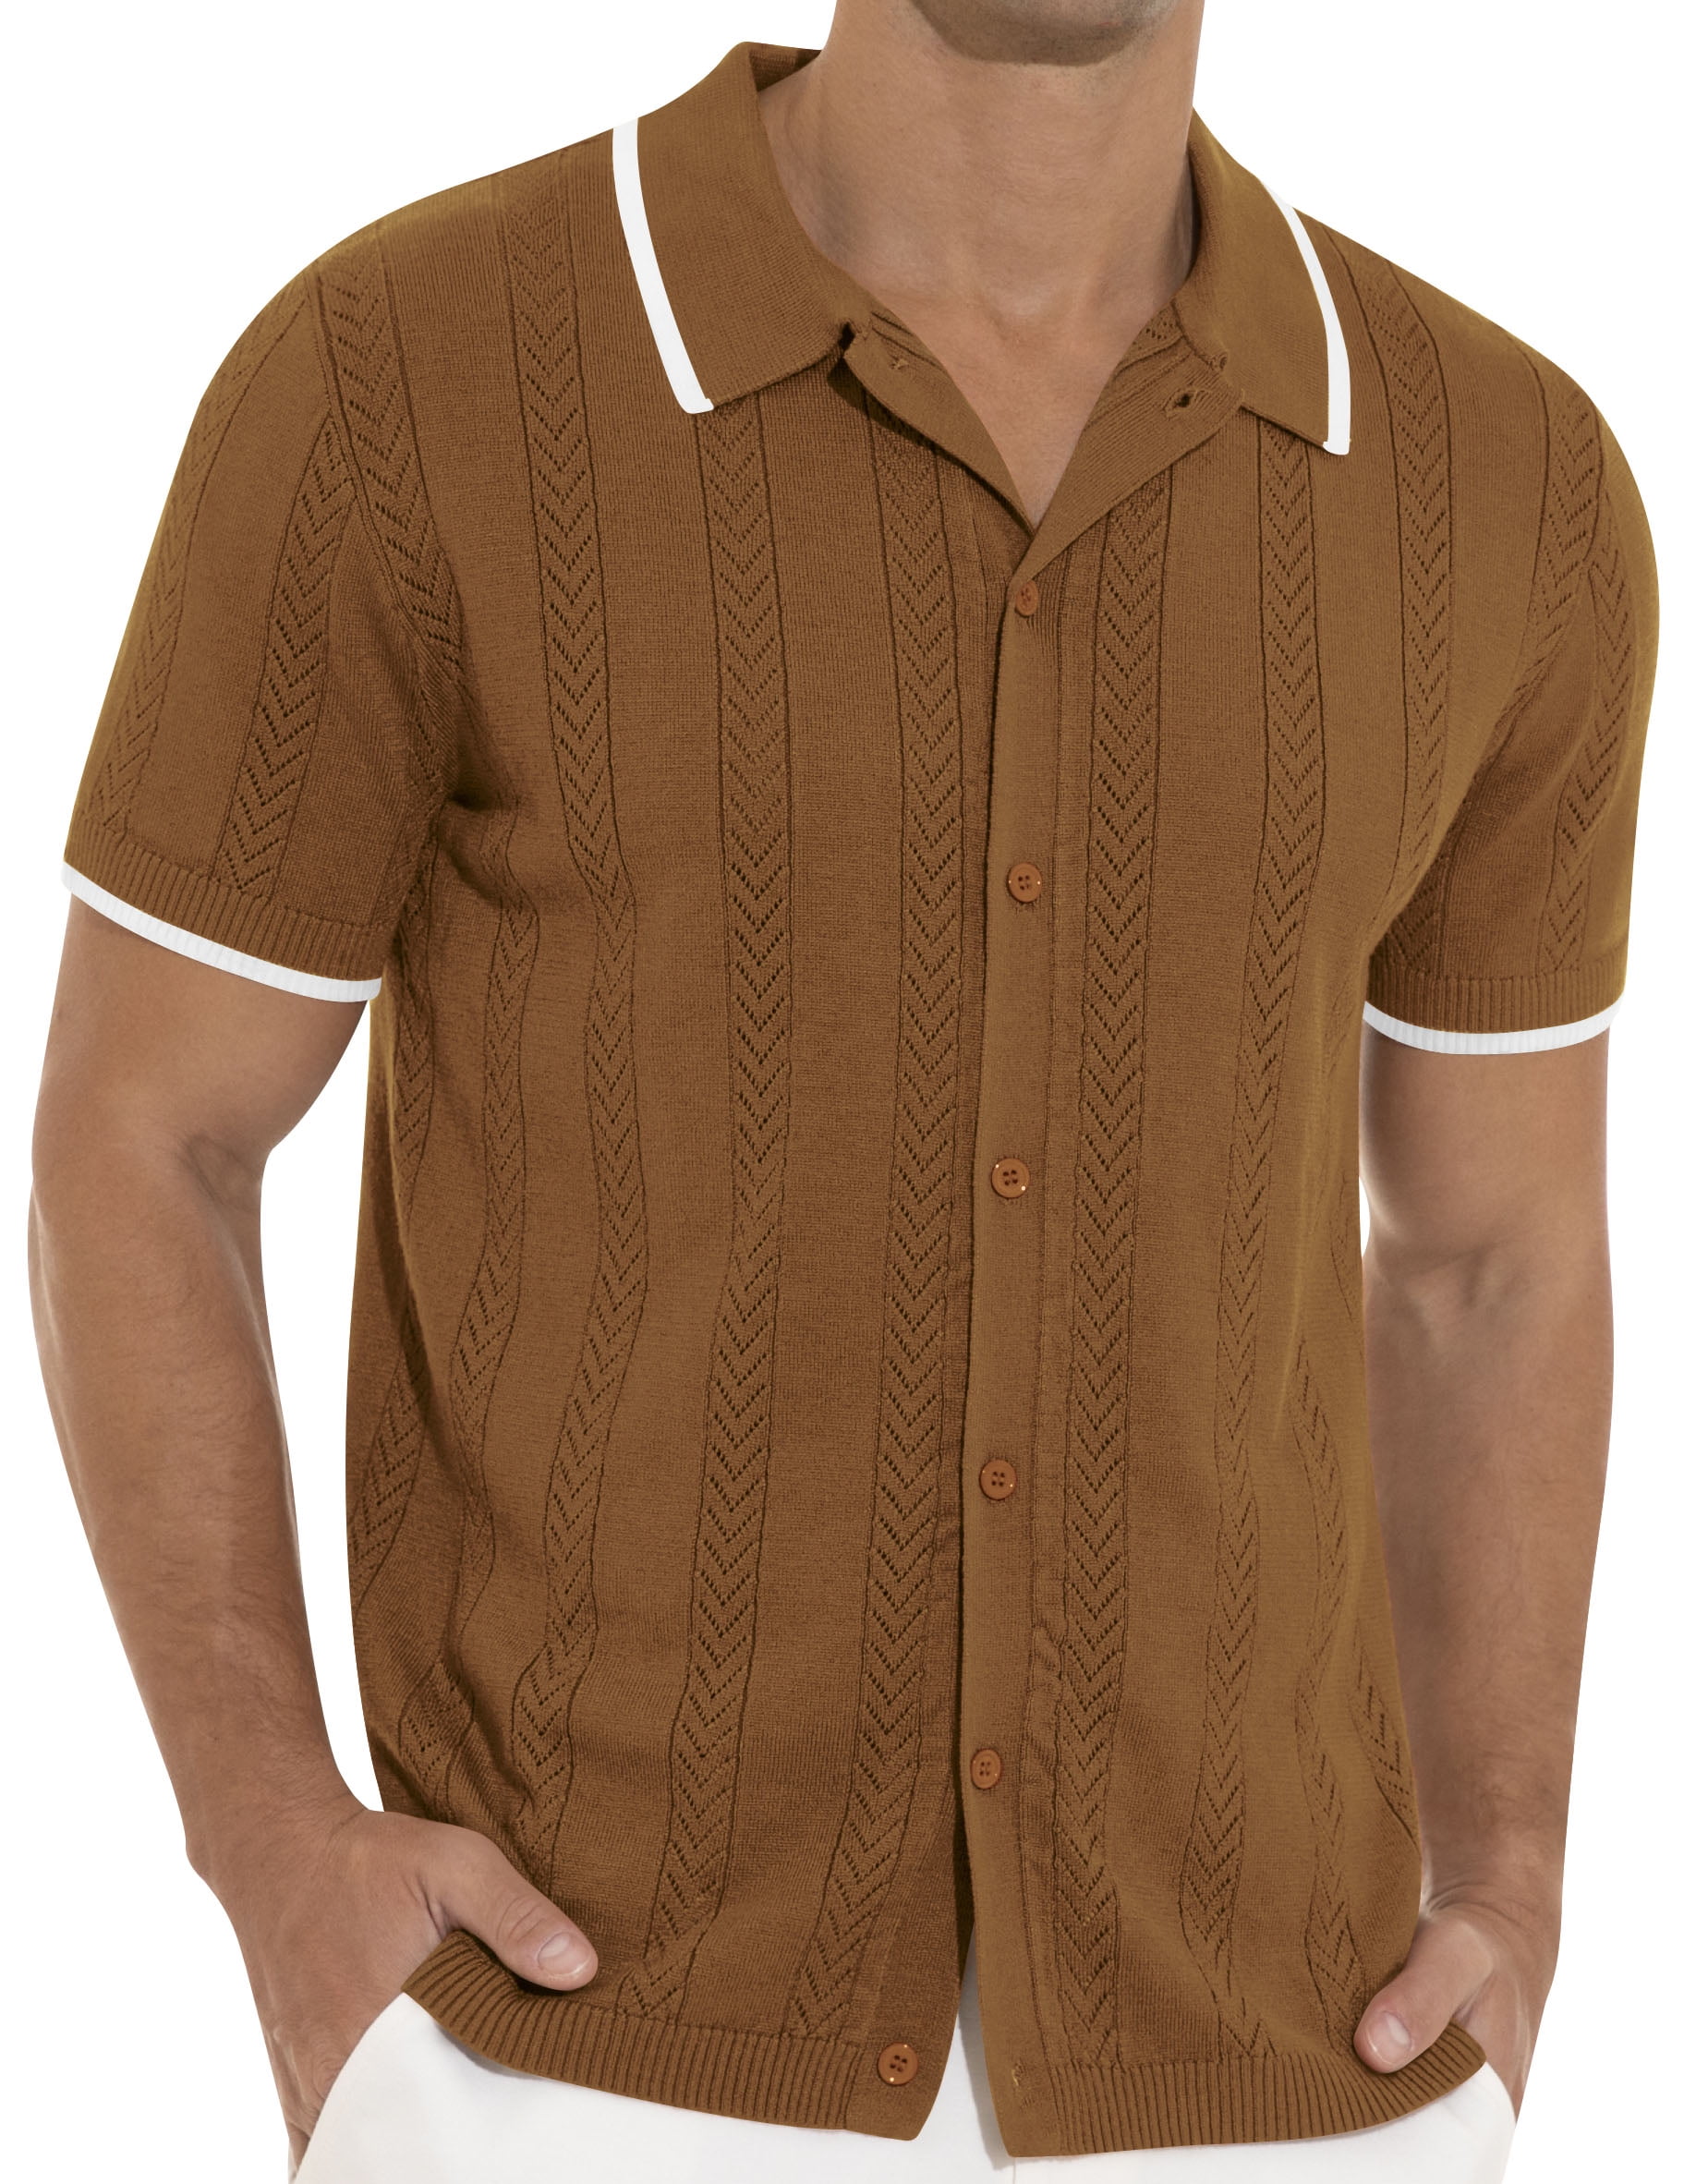 Iceglad Men's Casual Button Down Shirt Short Sleeve Vintage Clothes Knit Polo Shirts Summer Beach Shirts